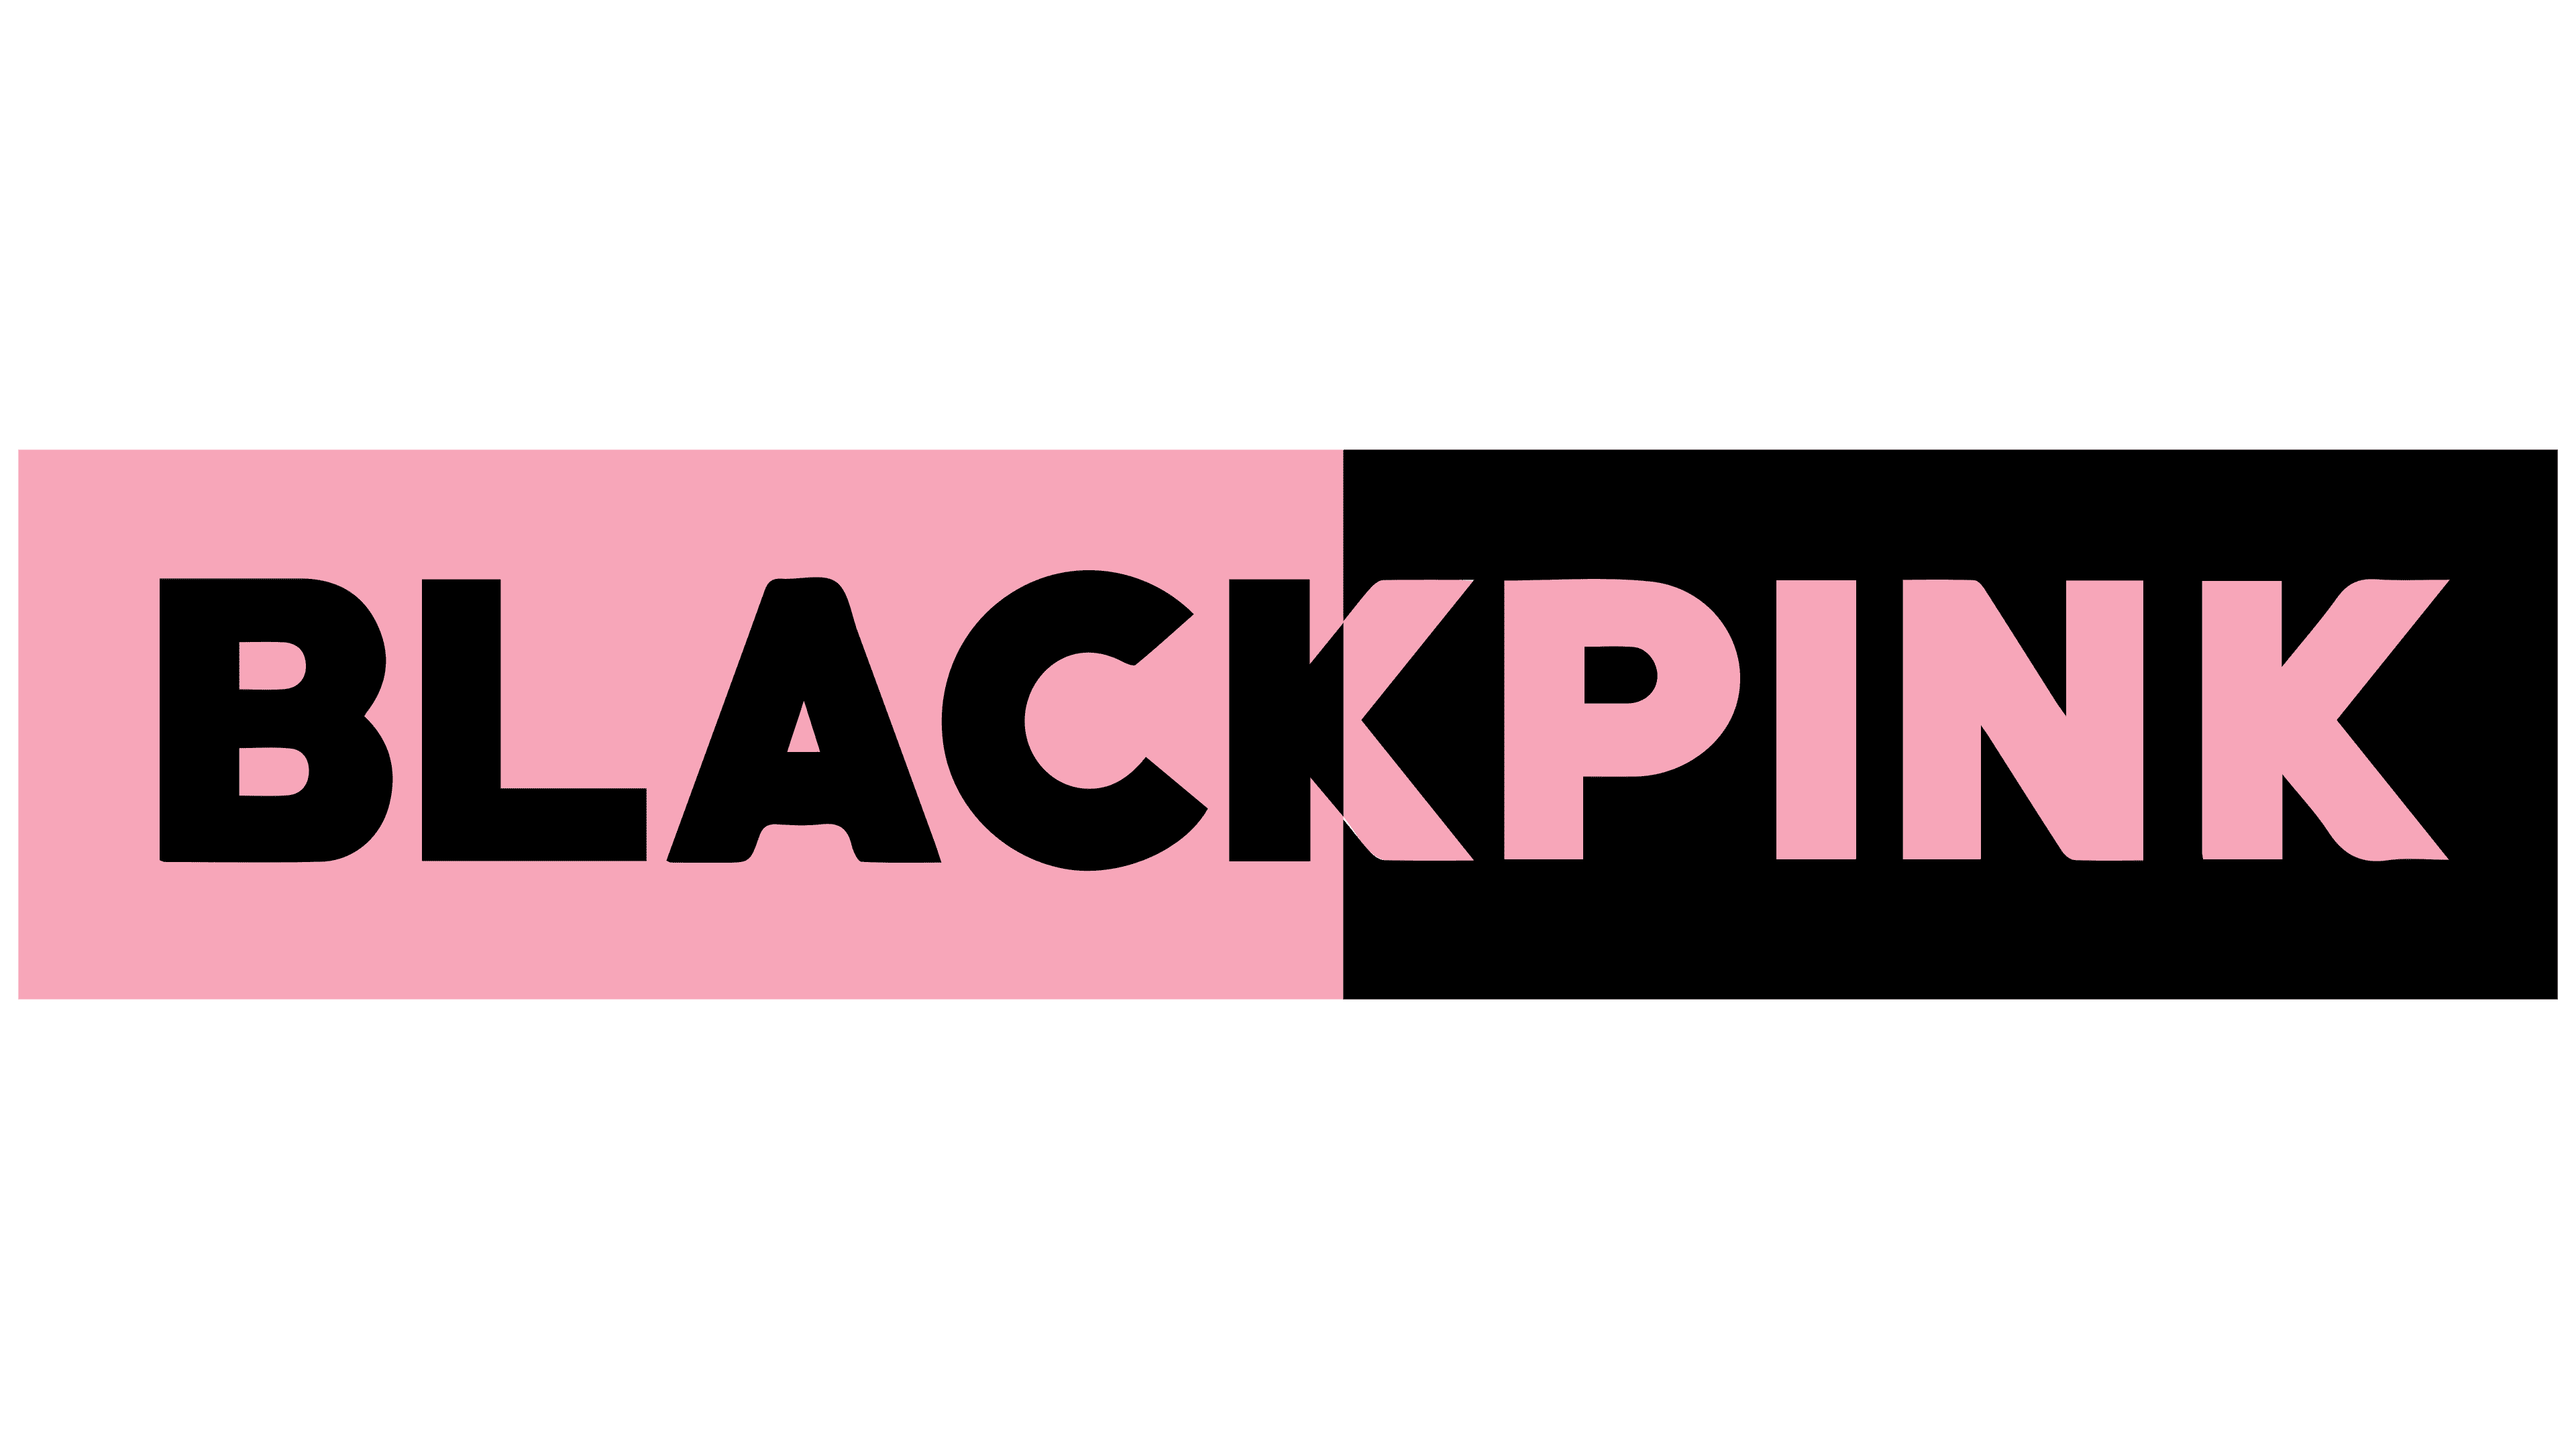 Tổng hợp 69+ blackpink logo hot nhất - Sai Gon English Center